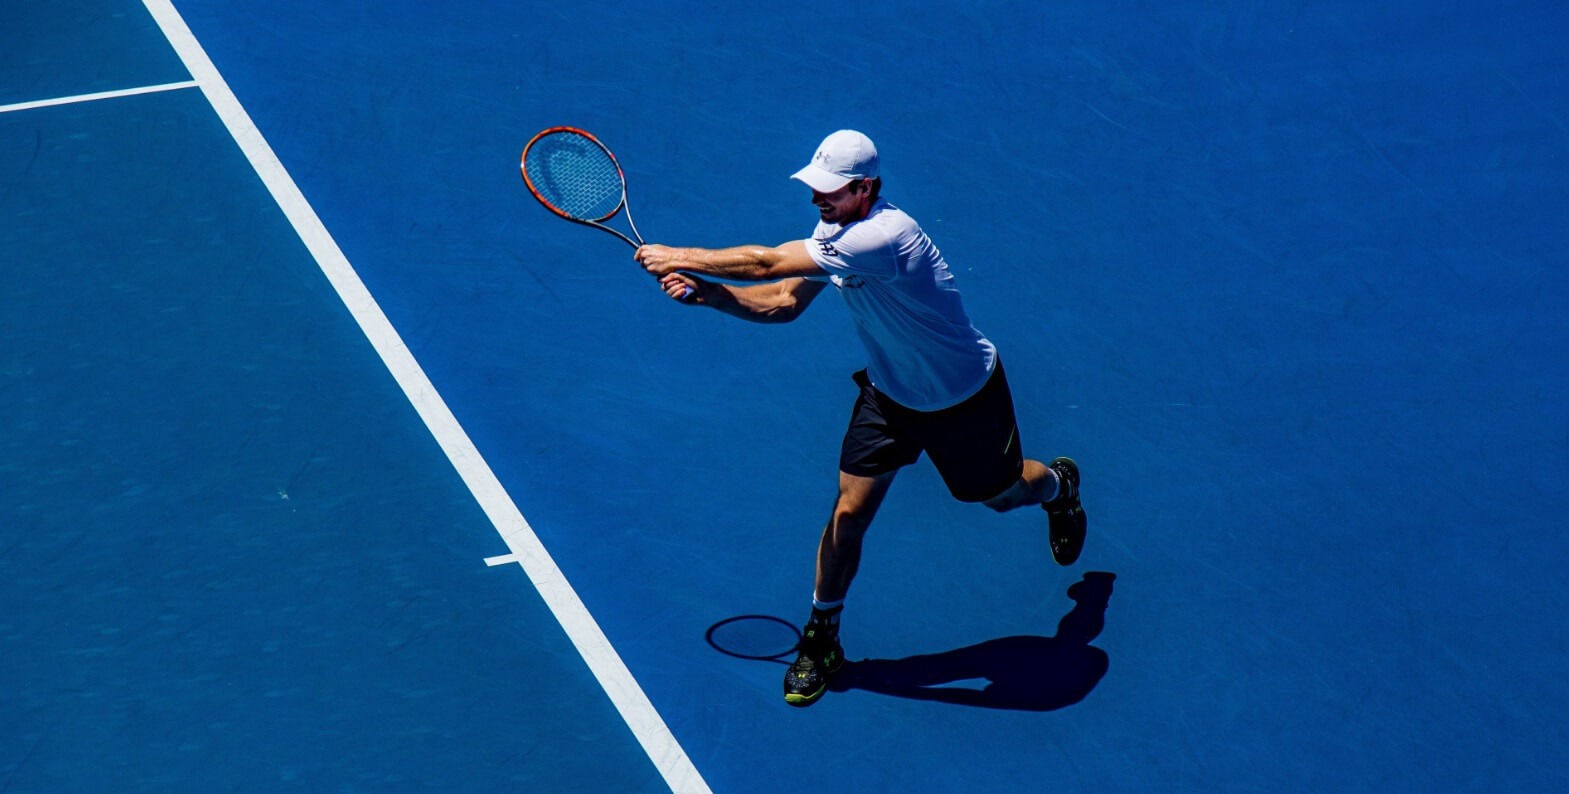 Terminologiya v tennise ejs svecha netbol kroos i ne tolko slovar terminov v tennise